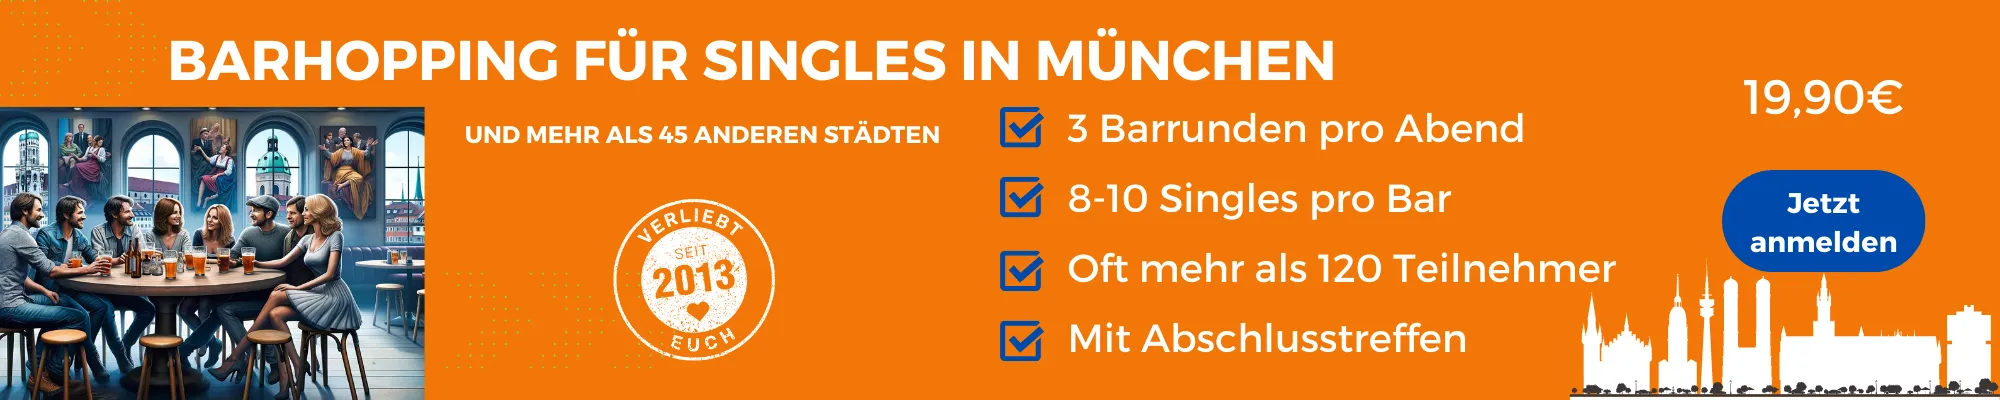 Face to Face München, Barhopping für Singles in München